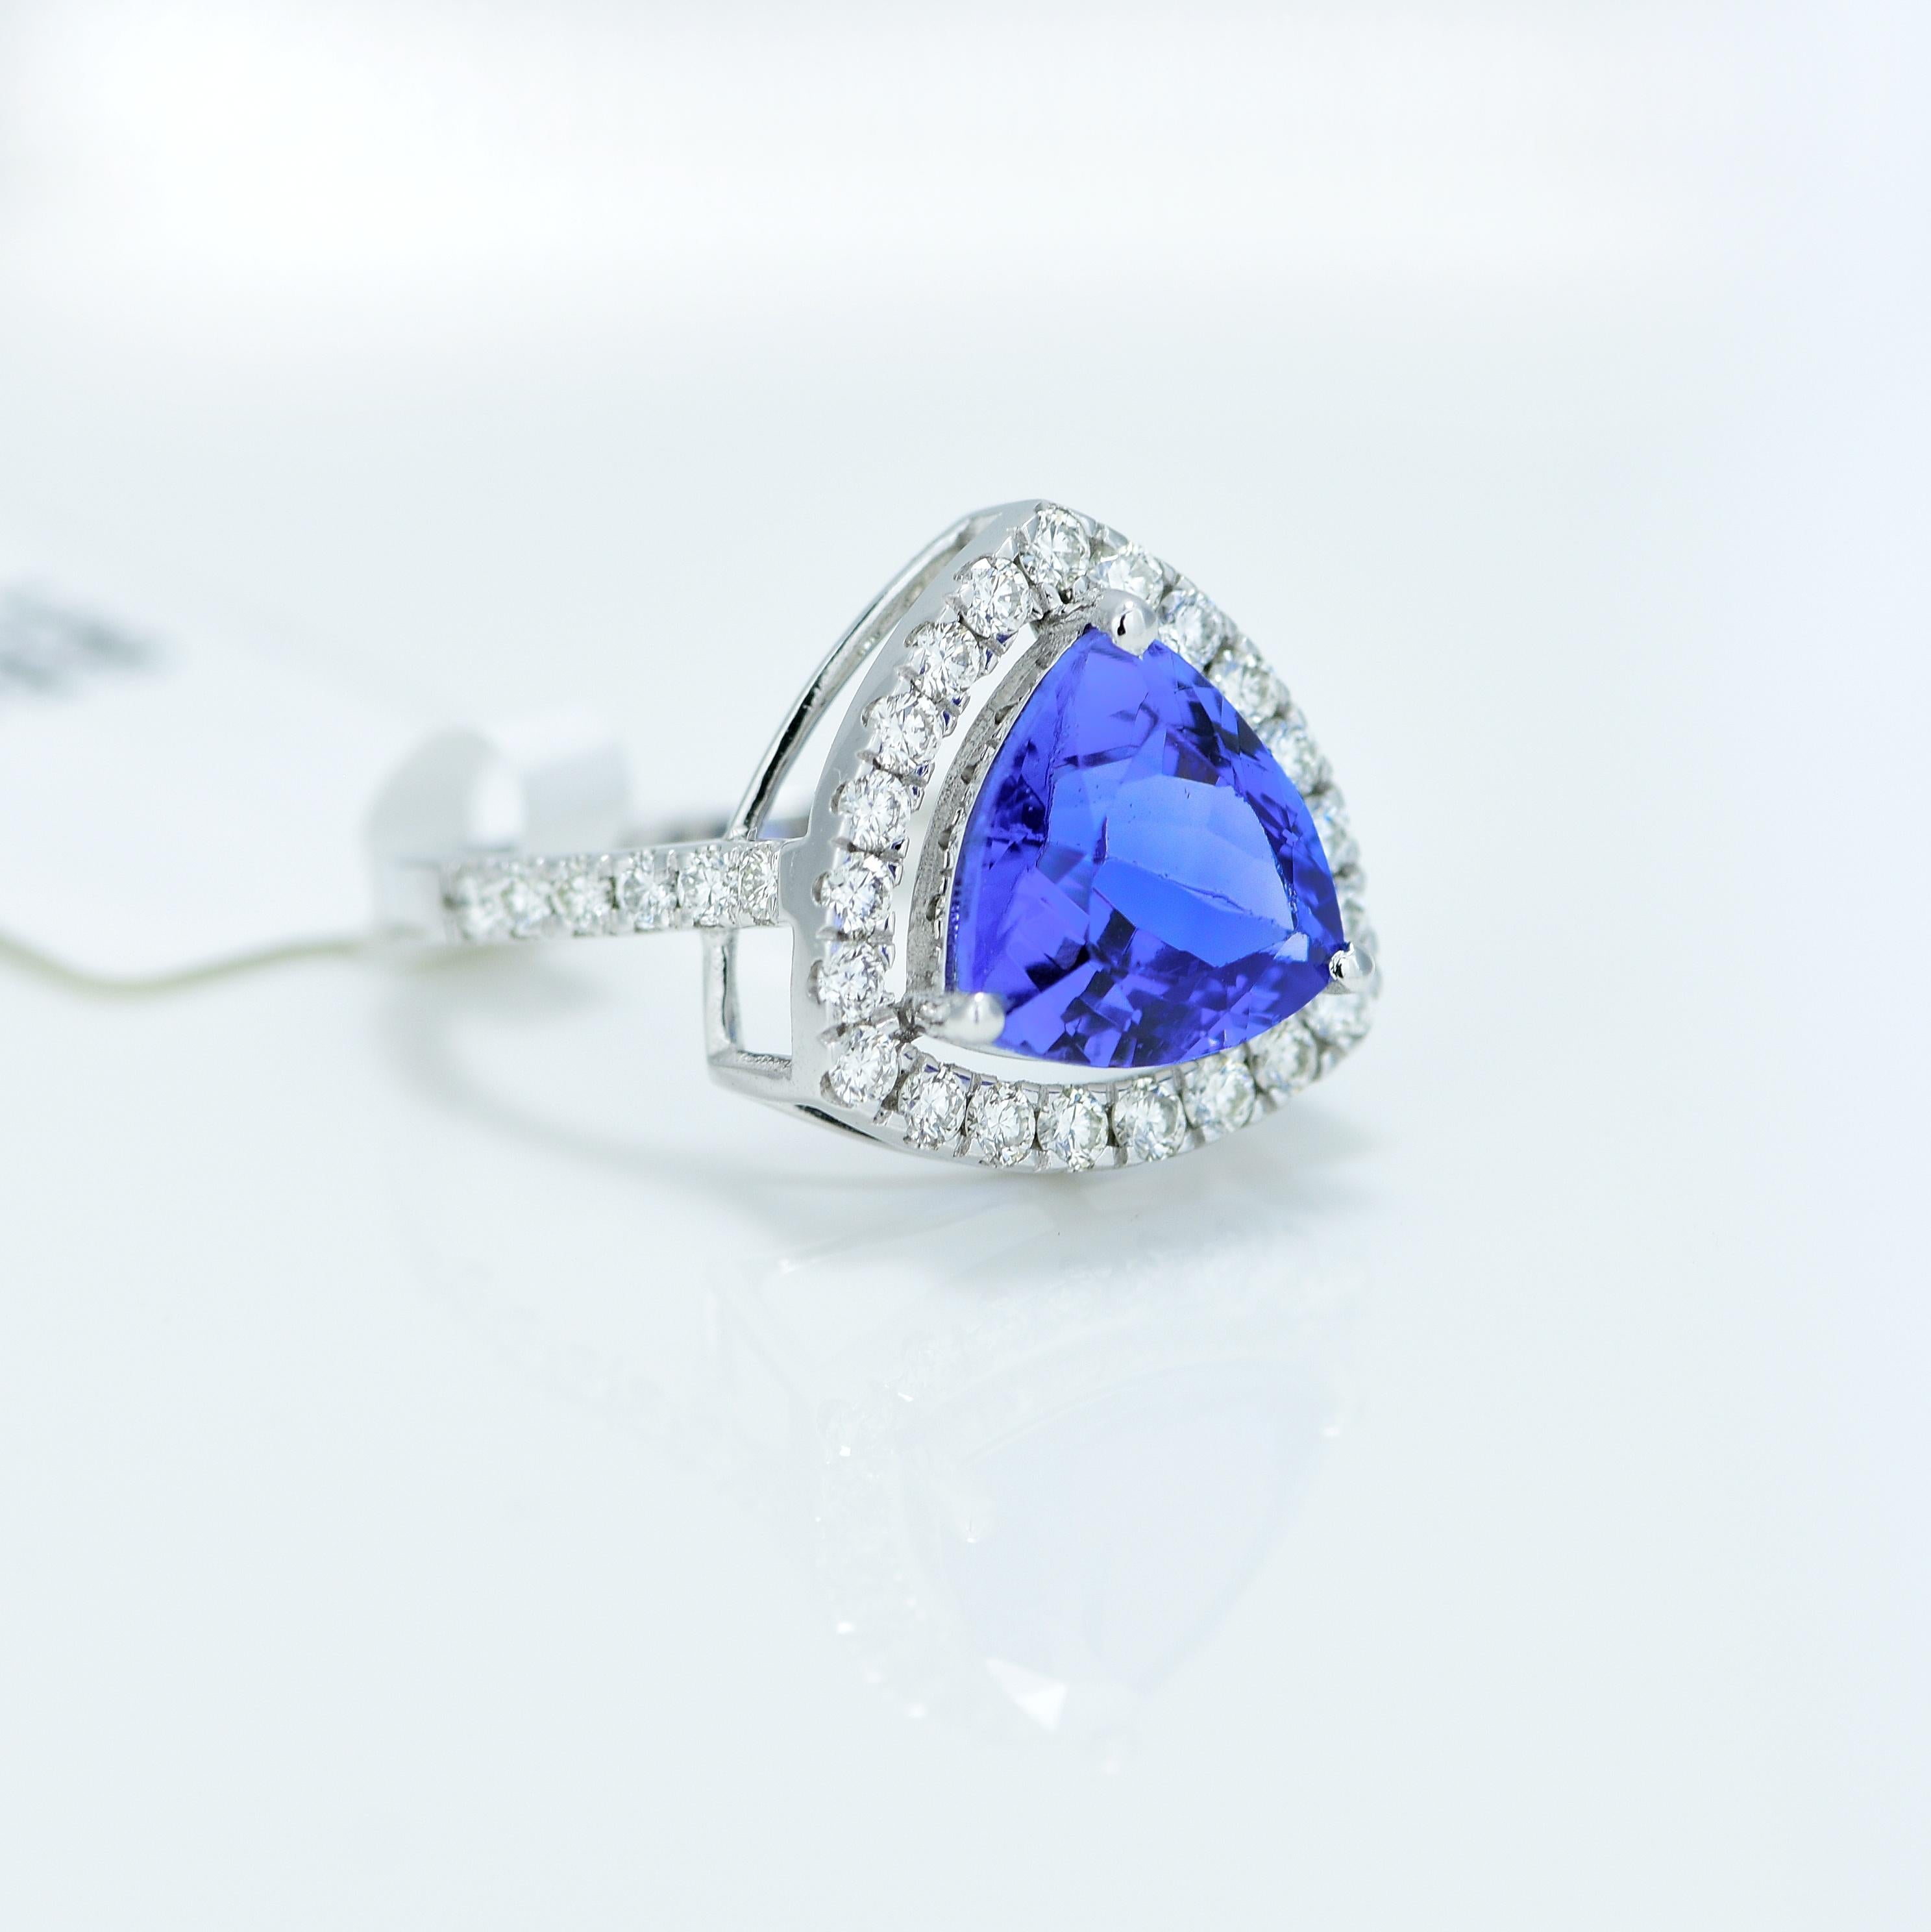 Stunning Violetish Blue Tanzanite and Diamond halo ring.

Centre Stone - Natural Tanzanite, 
Centre Stone Weight - 2.63 Carat, 
Centre Stone Shape & Cut - Triangular Step Cut
 
Total Number of Diamonds - 33, 
Diamonds Carat Weight - 0.56